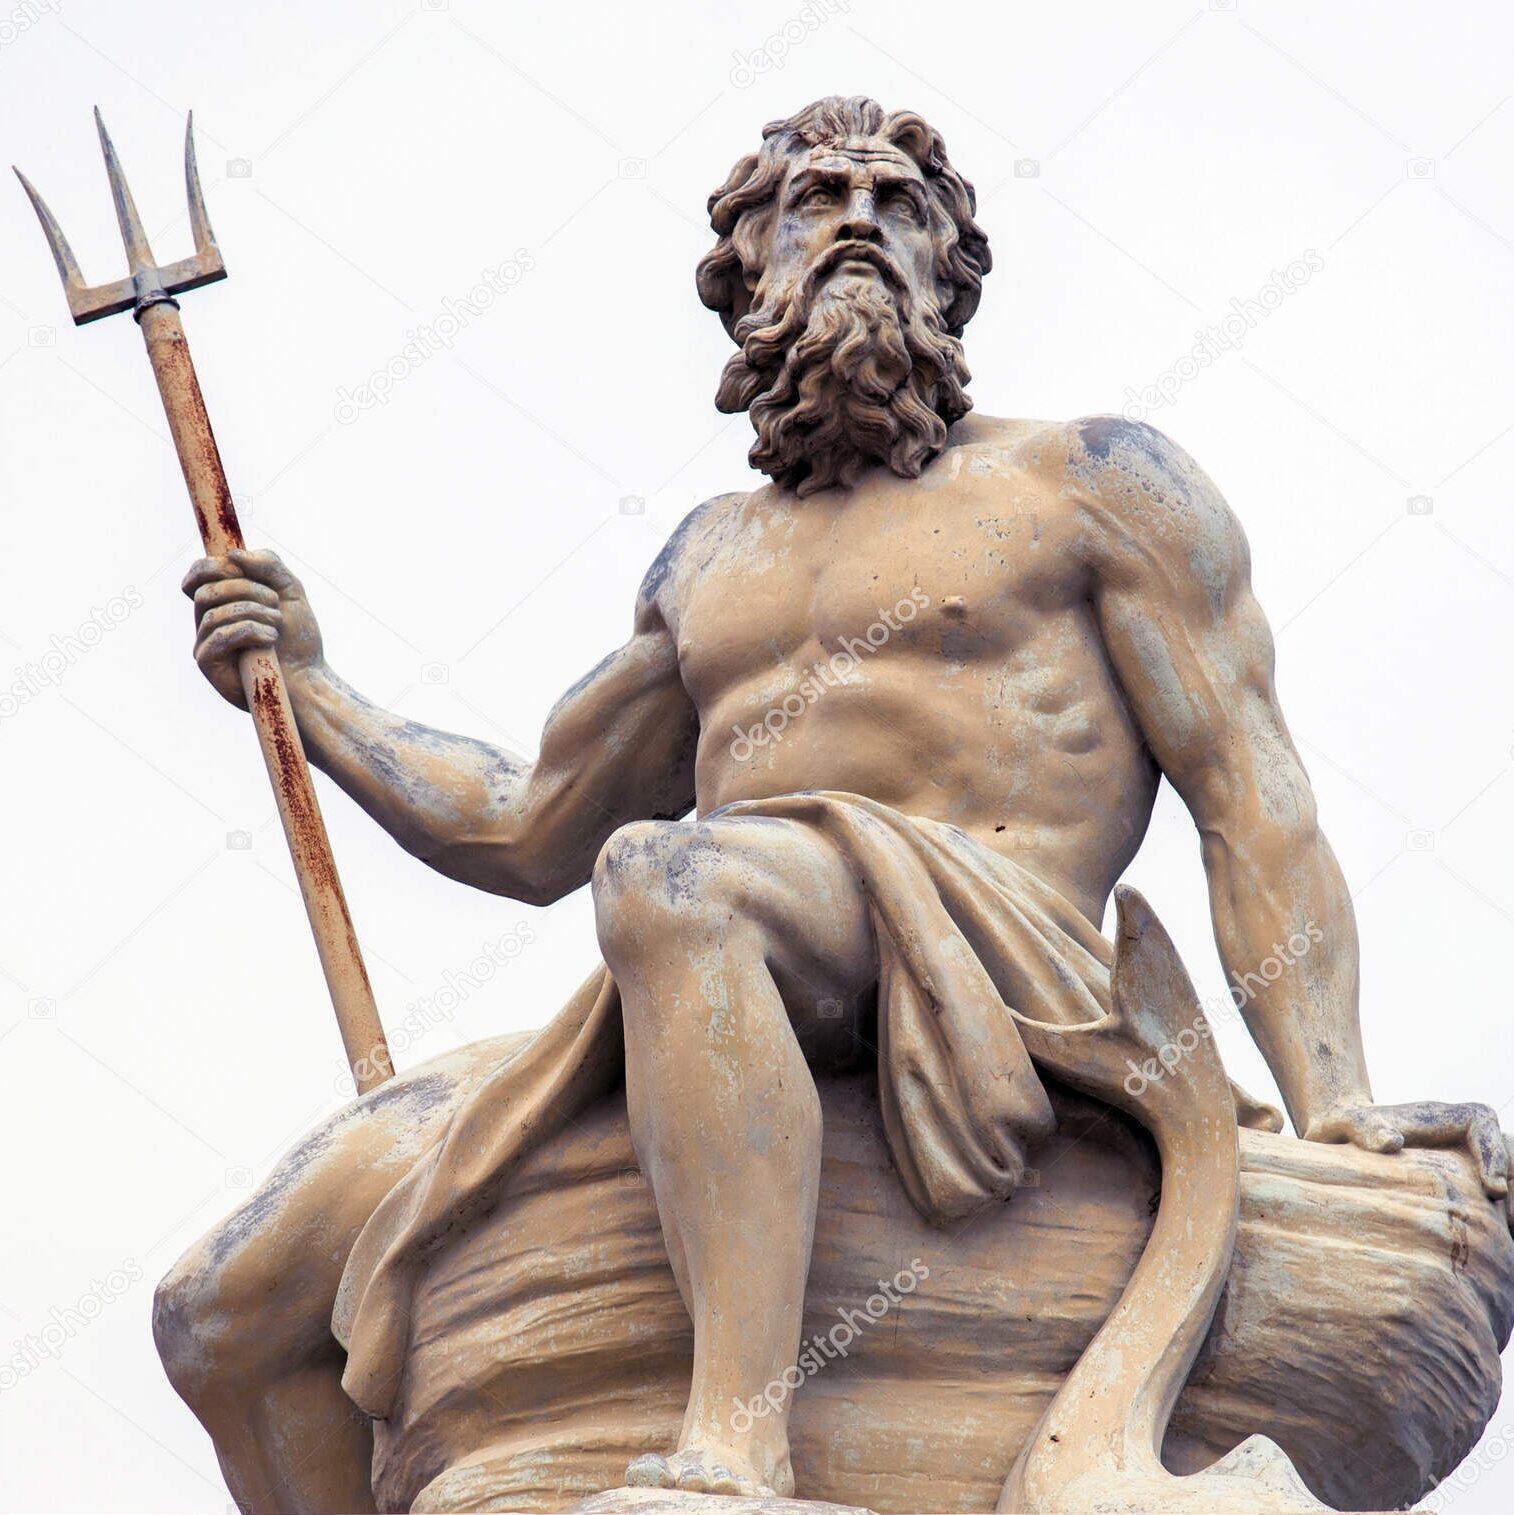 мифология, религия: бог Посейдон